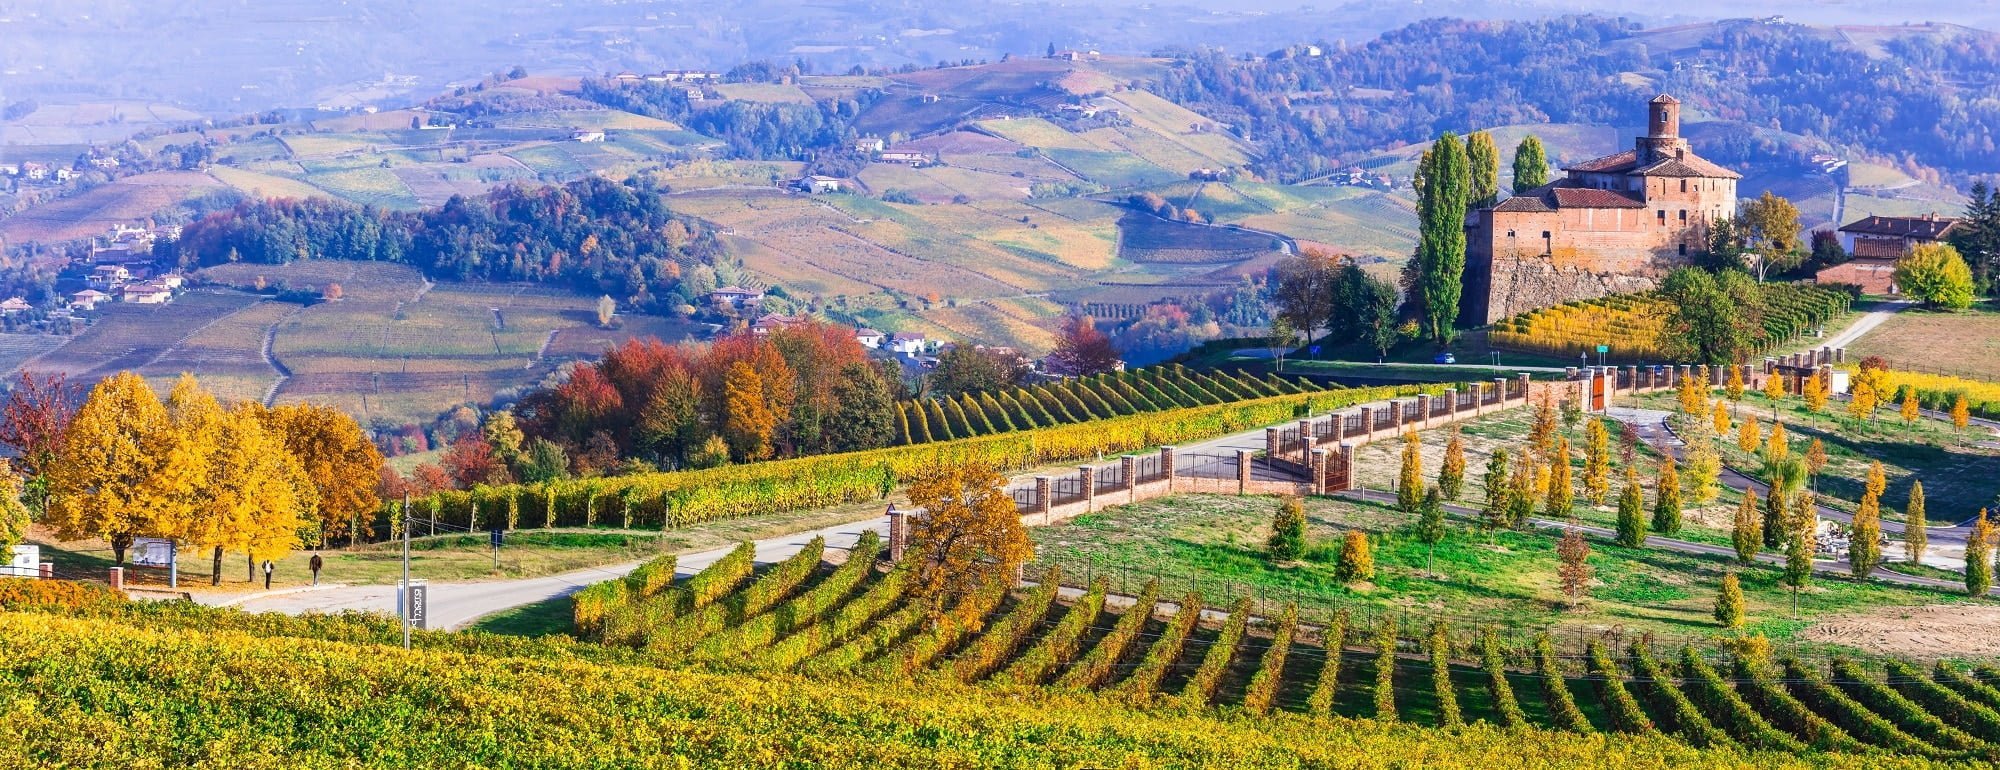 Alle vinområder i Italien. Piemonte